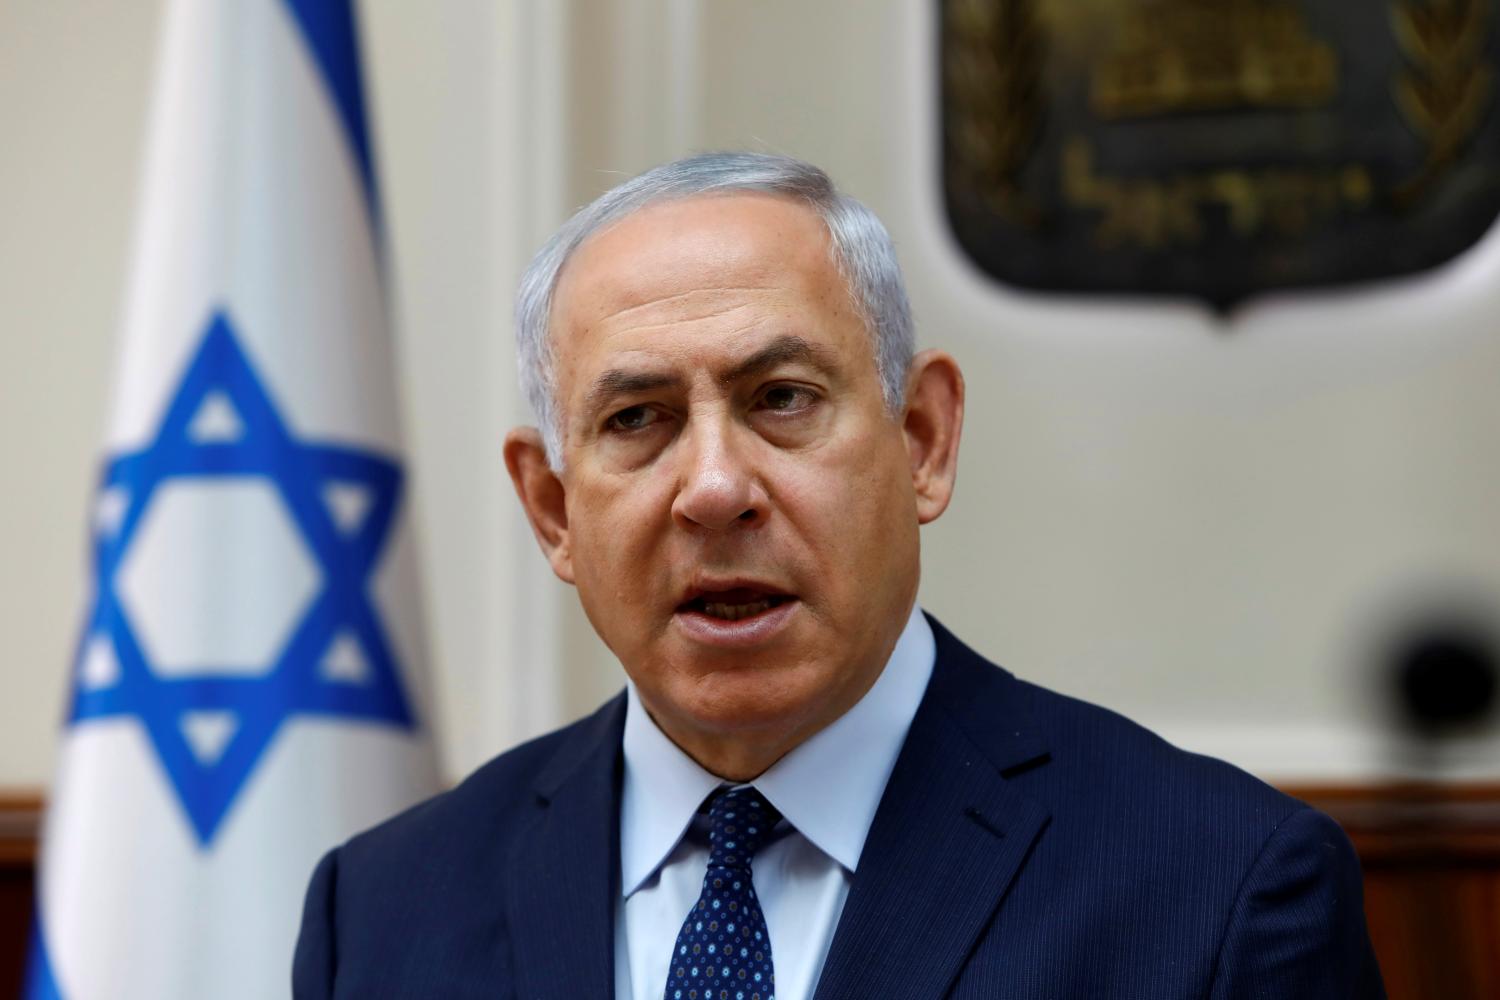 Israeli Prime Minister Benjamin Netanyahu opens the weekly cabinet meeting at his Jerusalem office September 26, 2017. REUTERS/Gali Tibbon/Pool - RC1C73A8EBF0